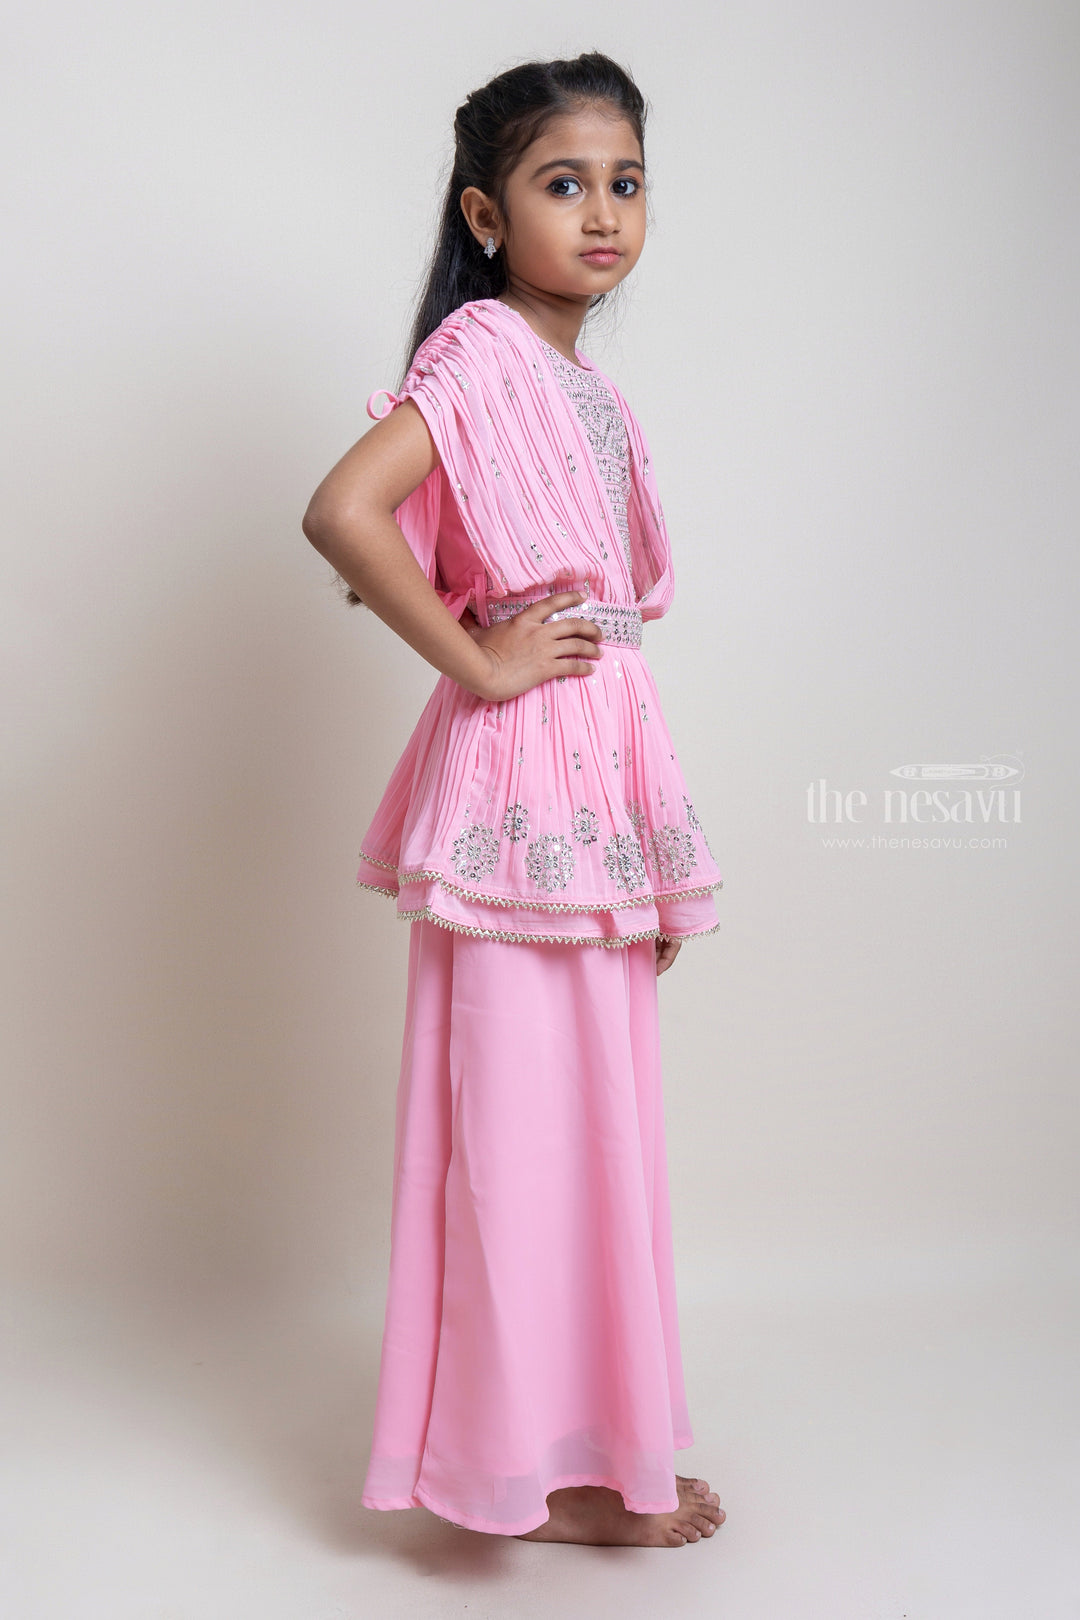 The Nesavu Girls Sharara / Plazo Set Elegant Salmon Pink Floral Designer Embroidery Tunic Tops And Palazzo Suit Sets For Girls Nesavu Pink Palazzo Designer Suit For Girls | Elegant Wear For Girls | The Nesavu